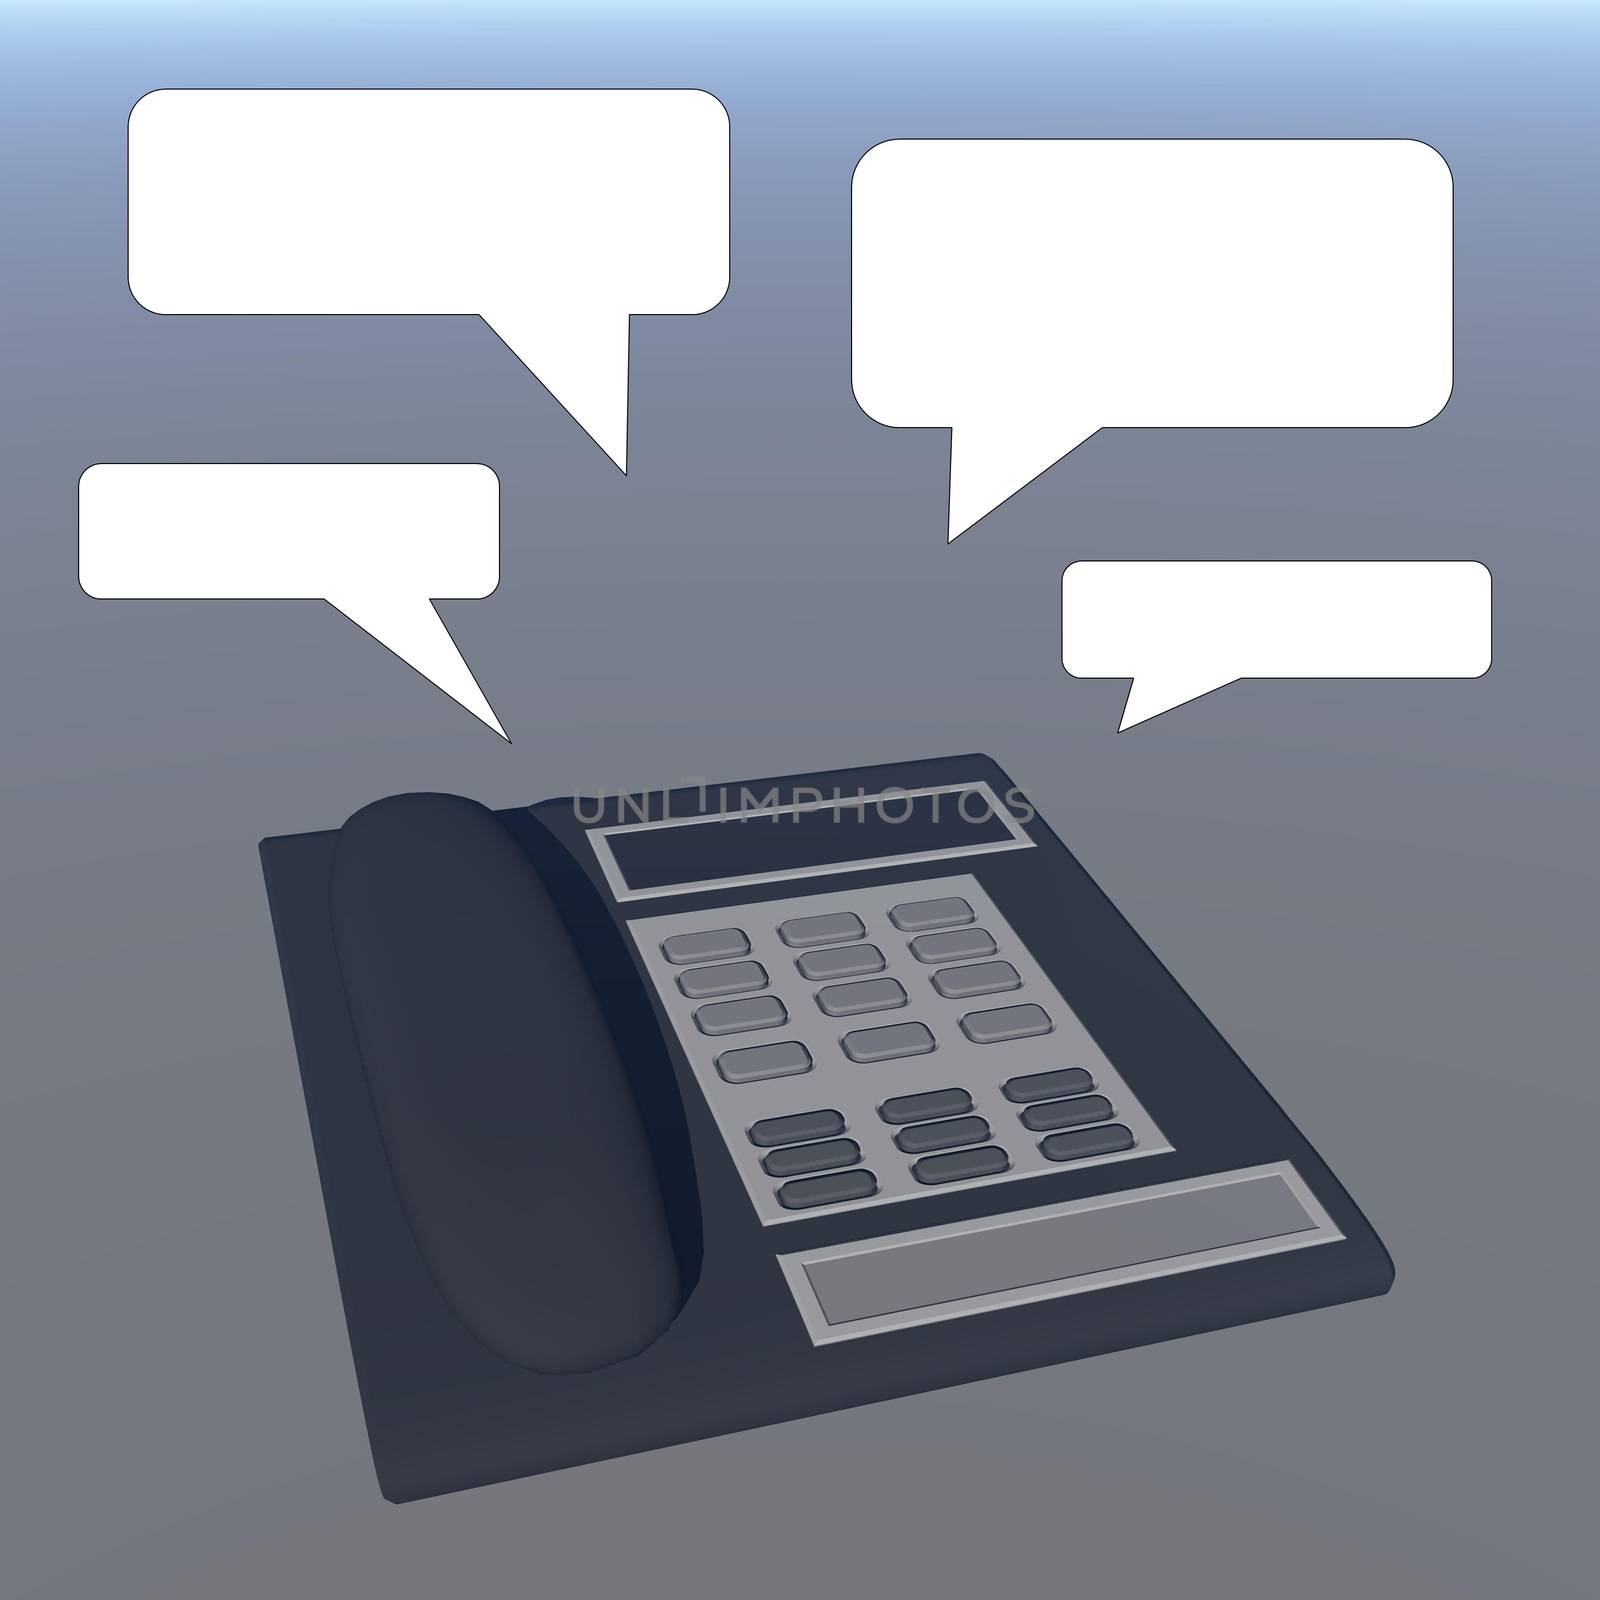 Vintage phone conversation - 3D render by Elenaphotos21